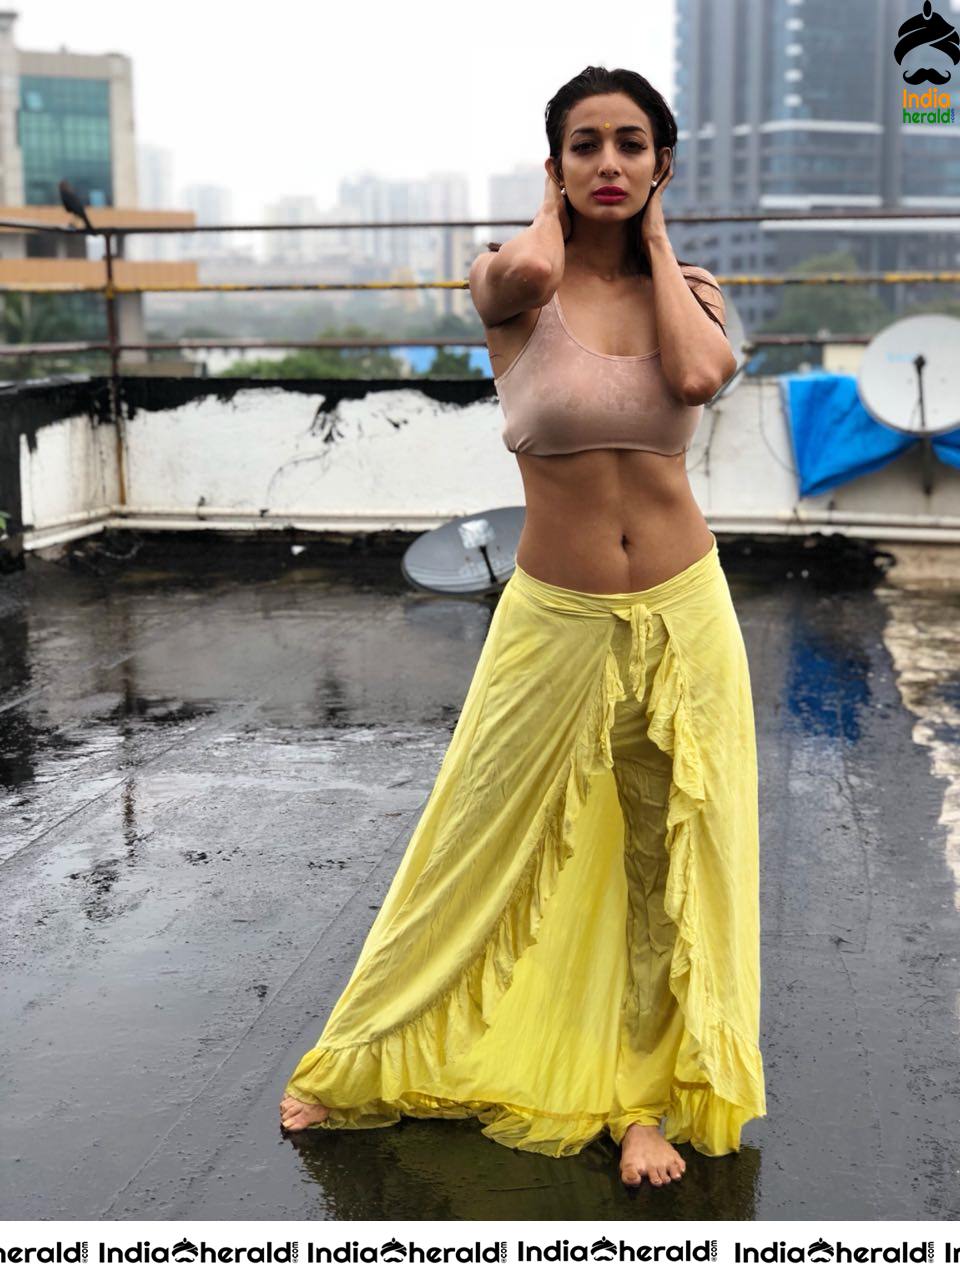 Heena Panchal Wearing a Sports Bra and Exposing her Hot Body on Roof Top while enjoying Rain